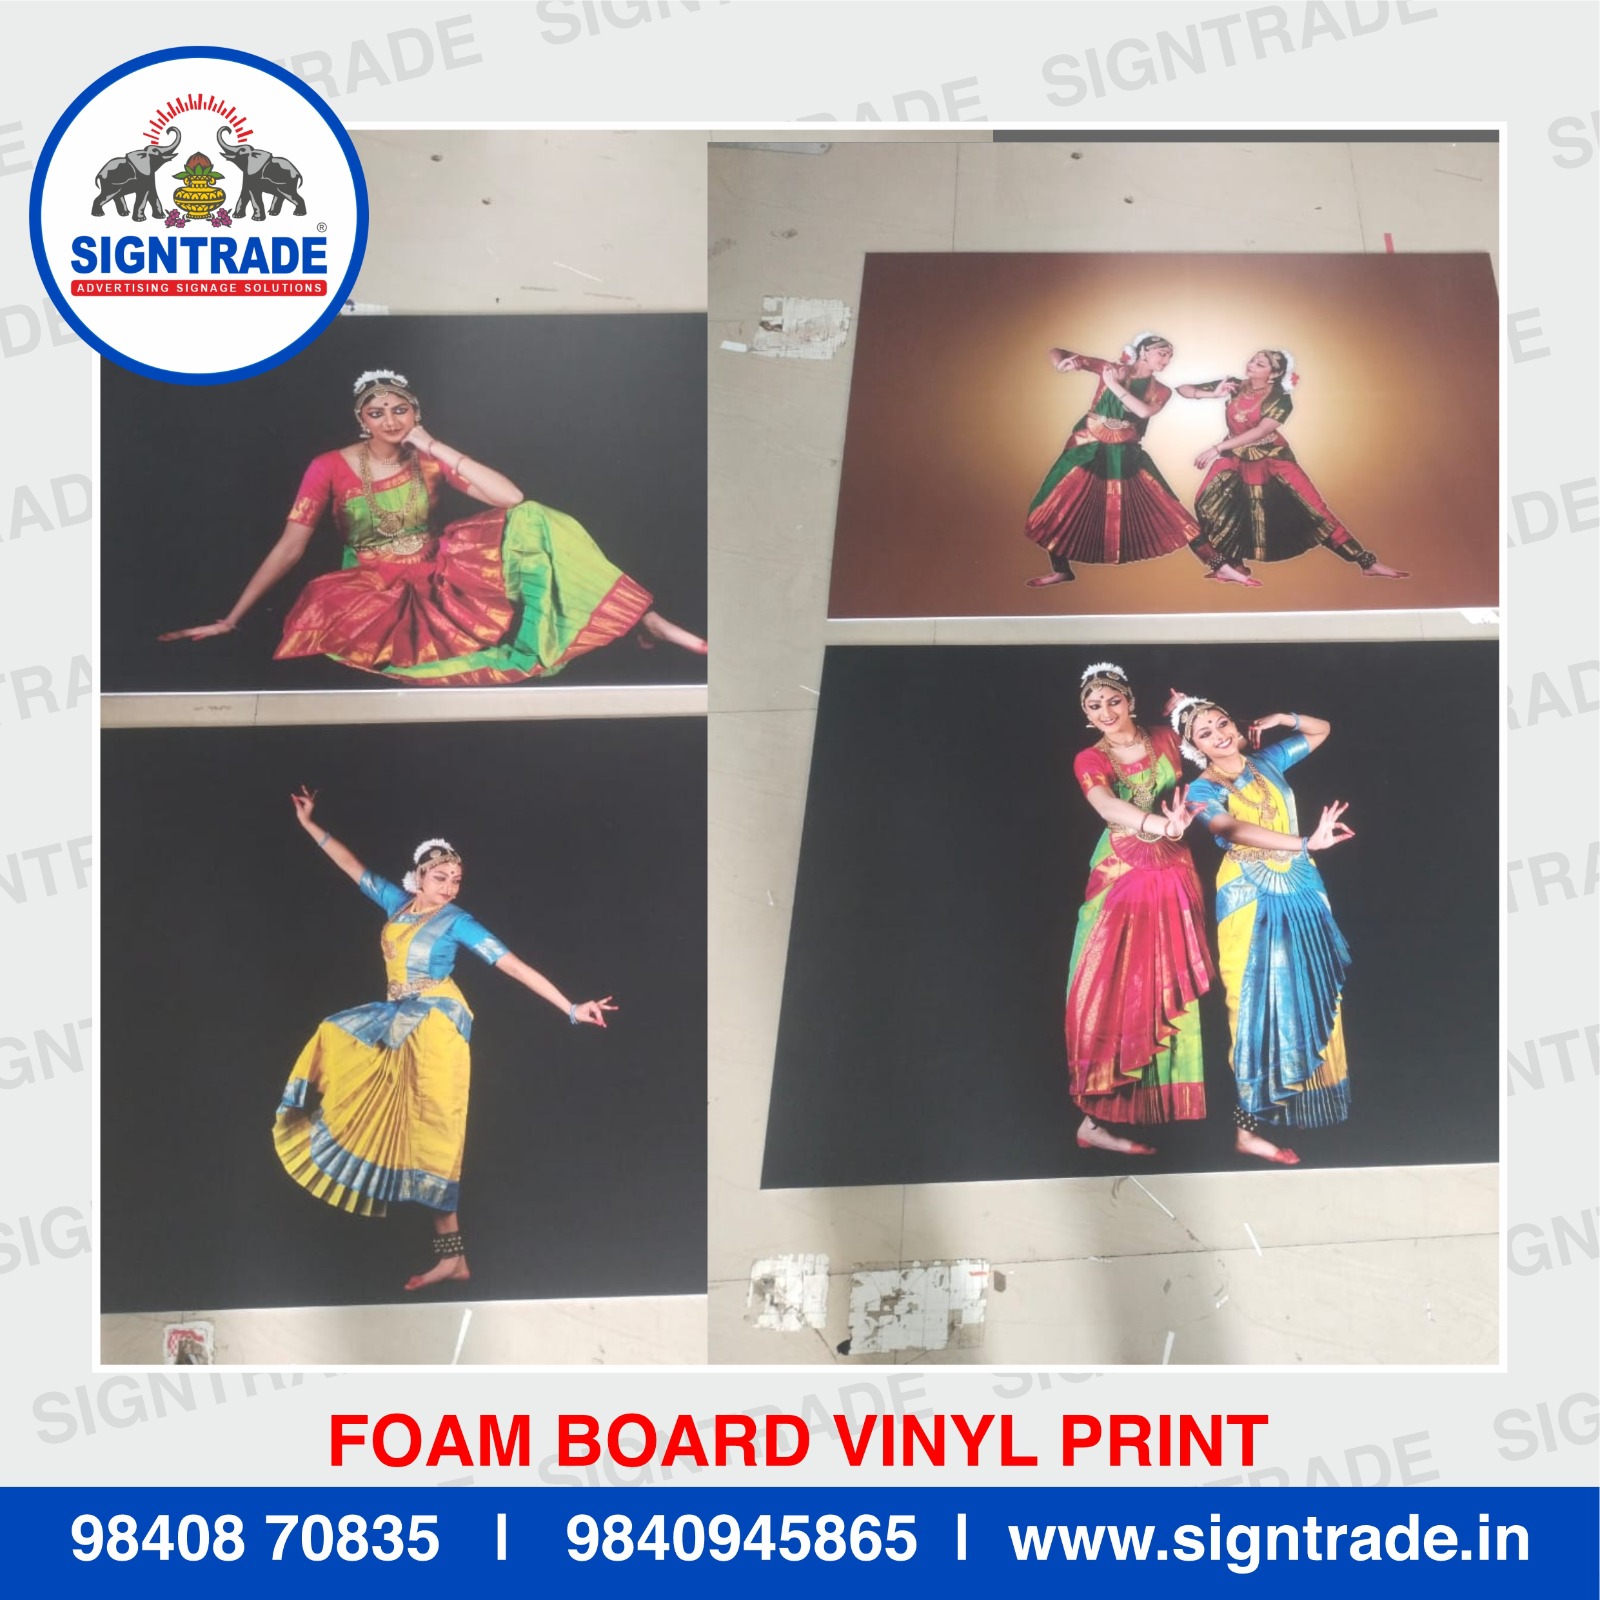 Foam Board with Vinyl Print in Chennai